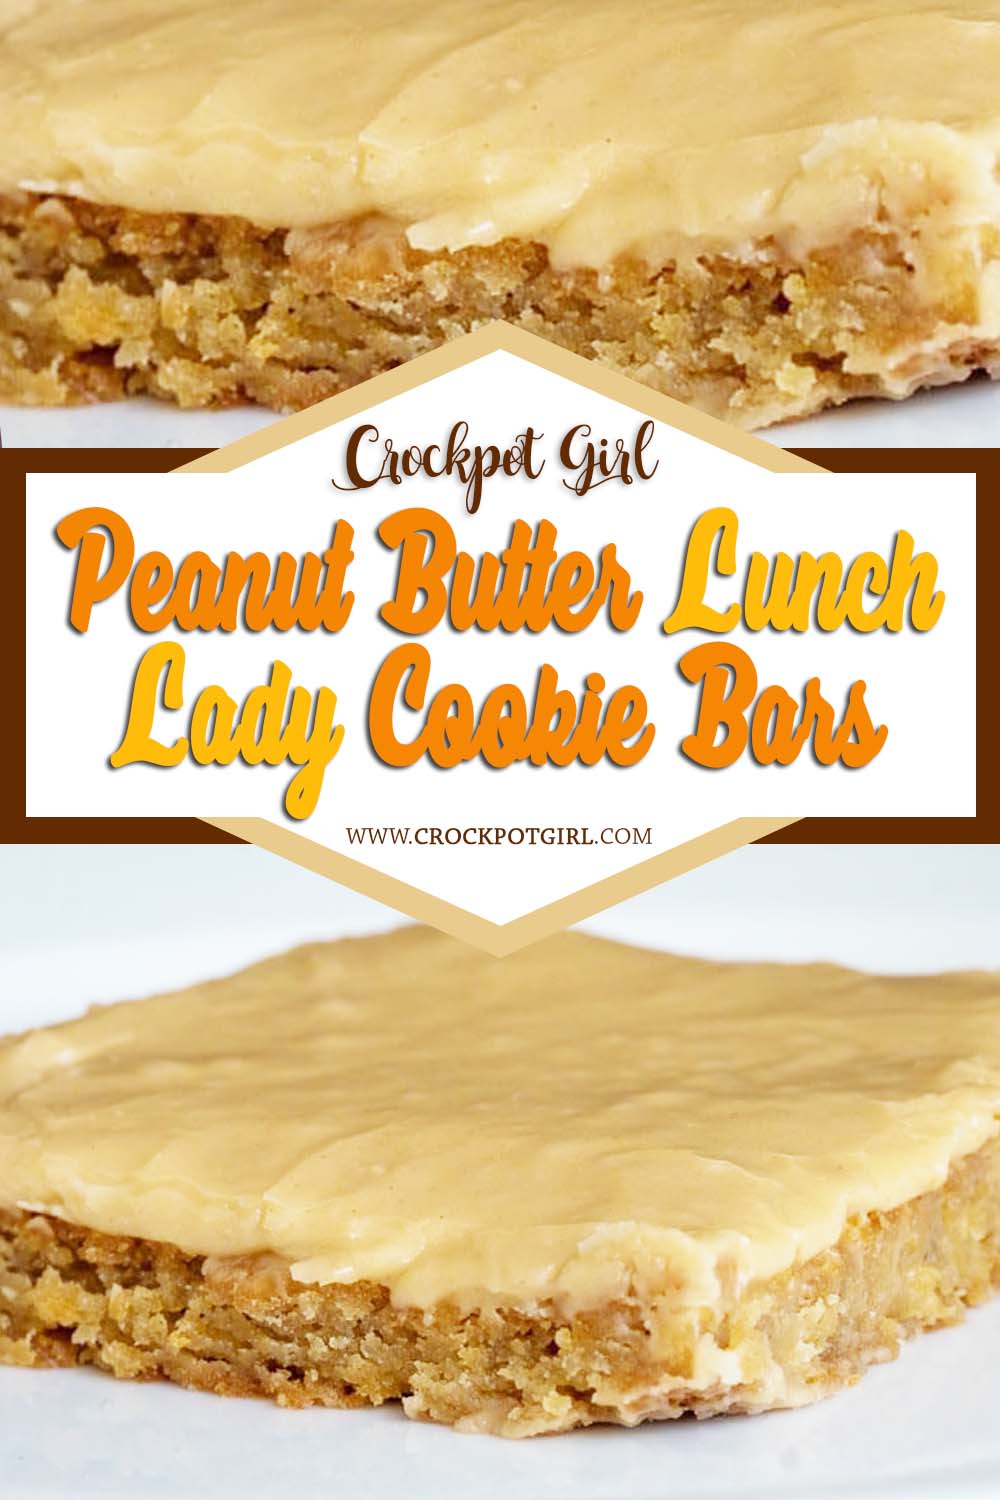 Peanut Butter Cookie Bars Recipe